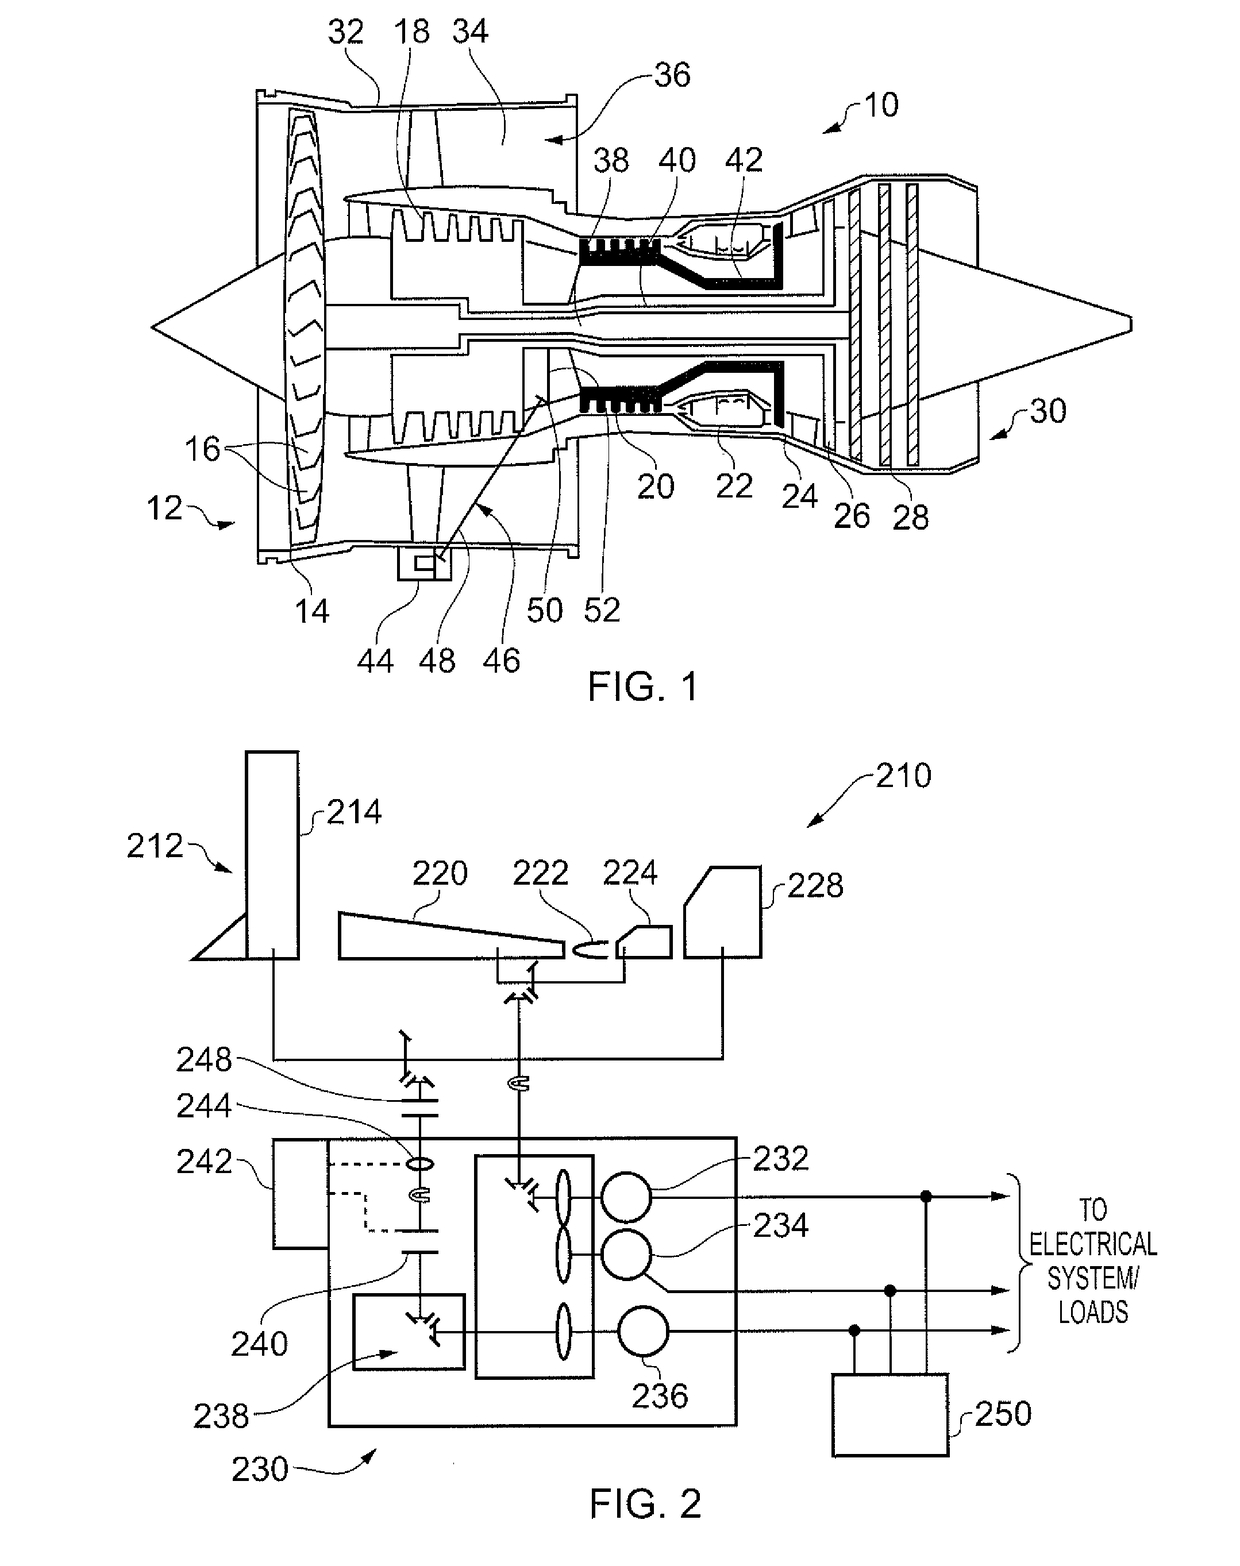 Electrical generation arrangement for an aircraft